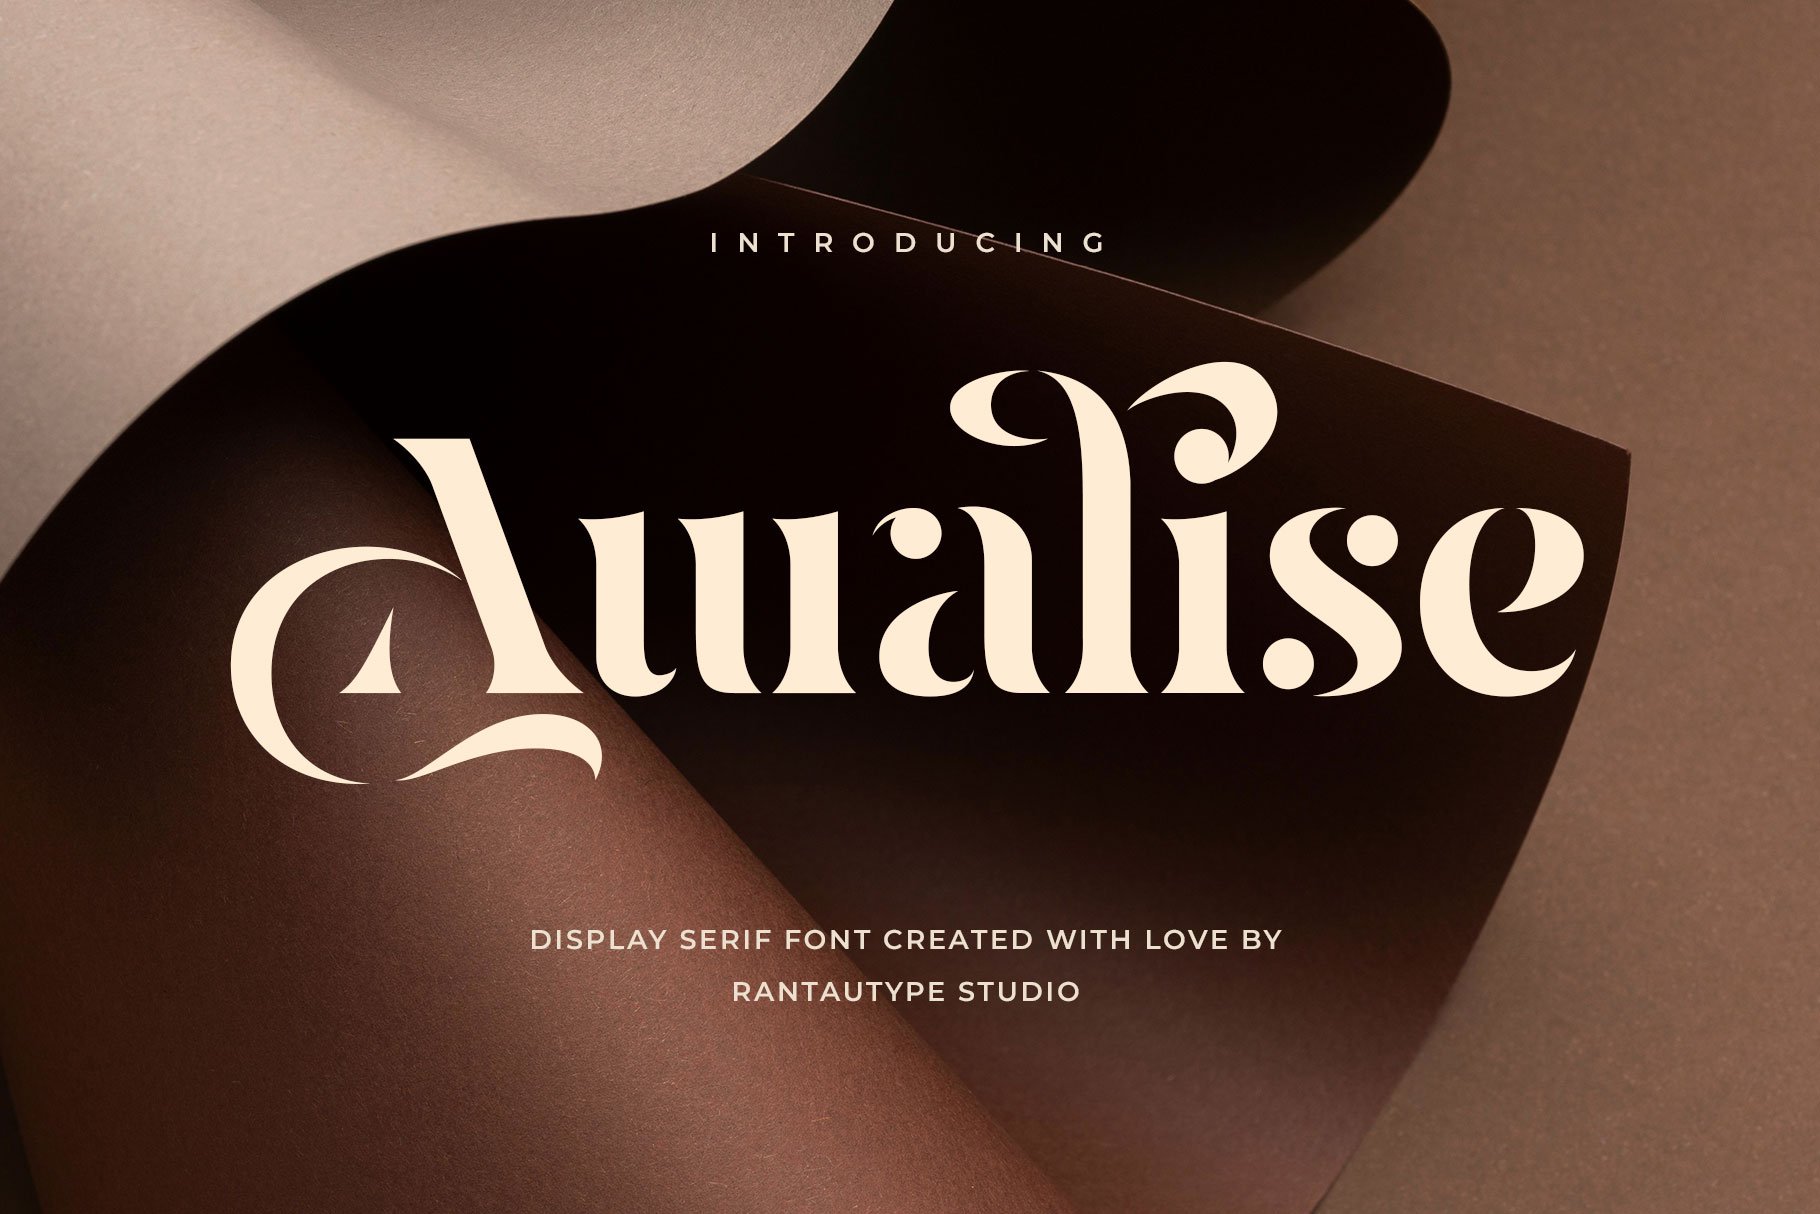 Auralise Logo Font - Design Cuts